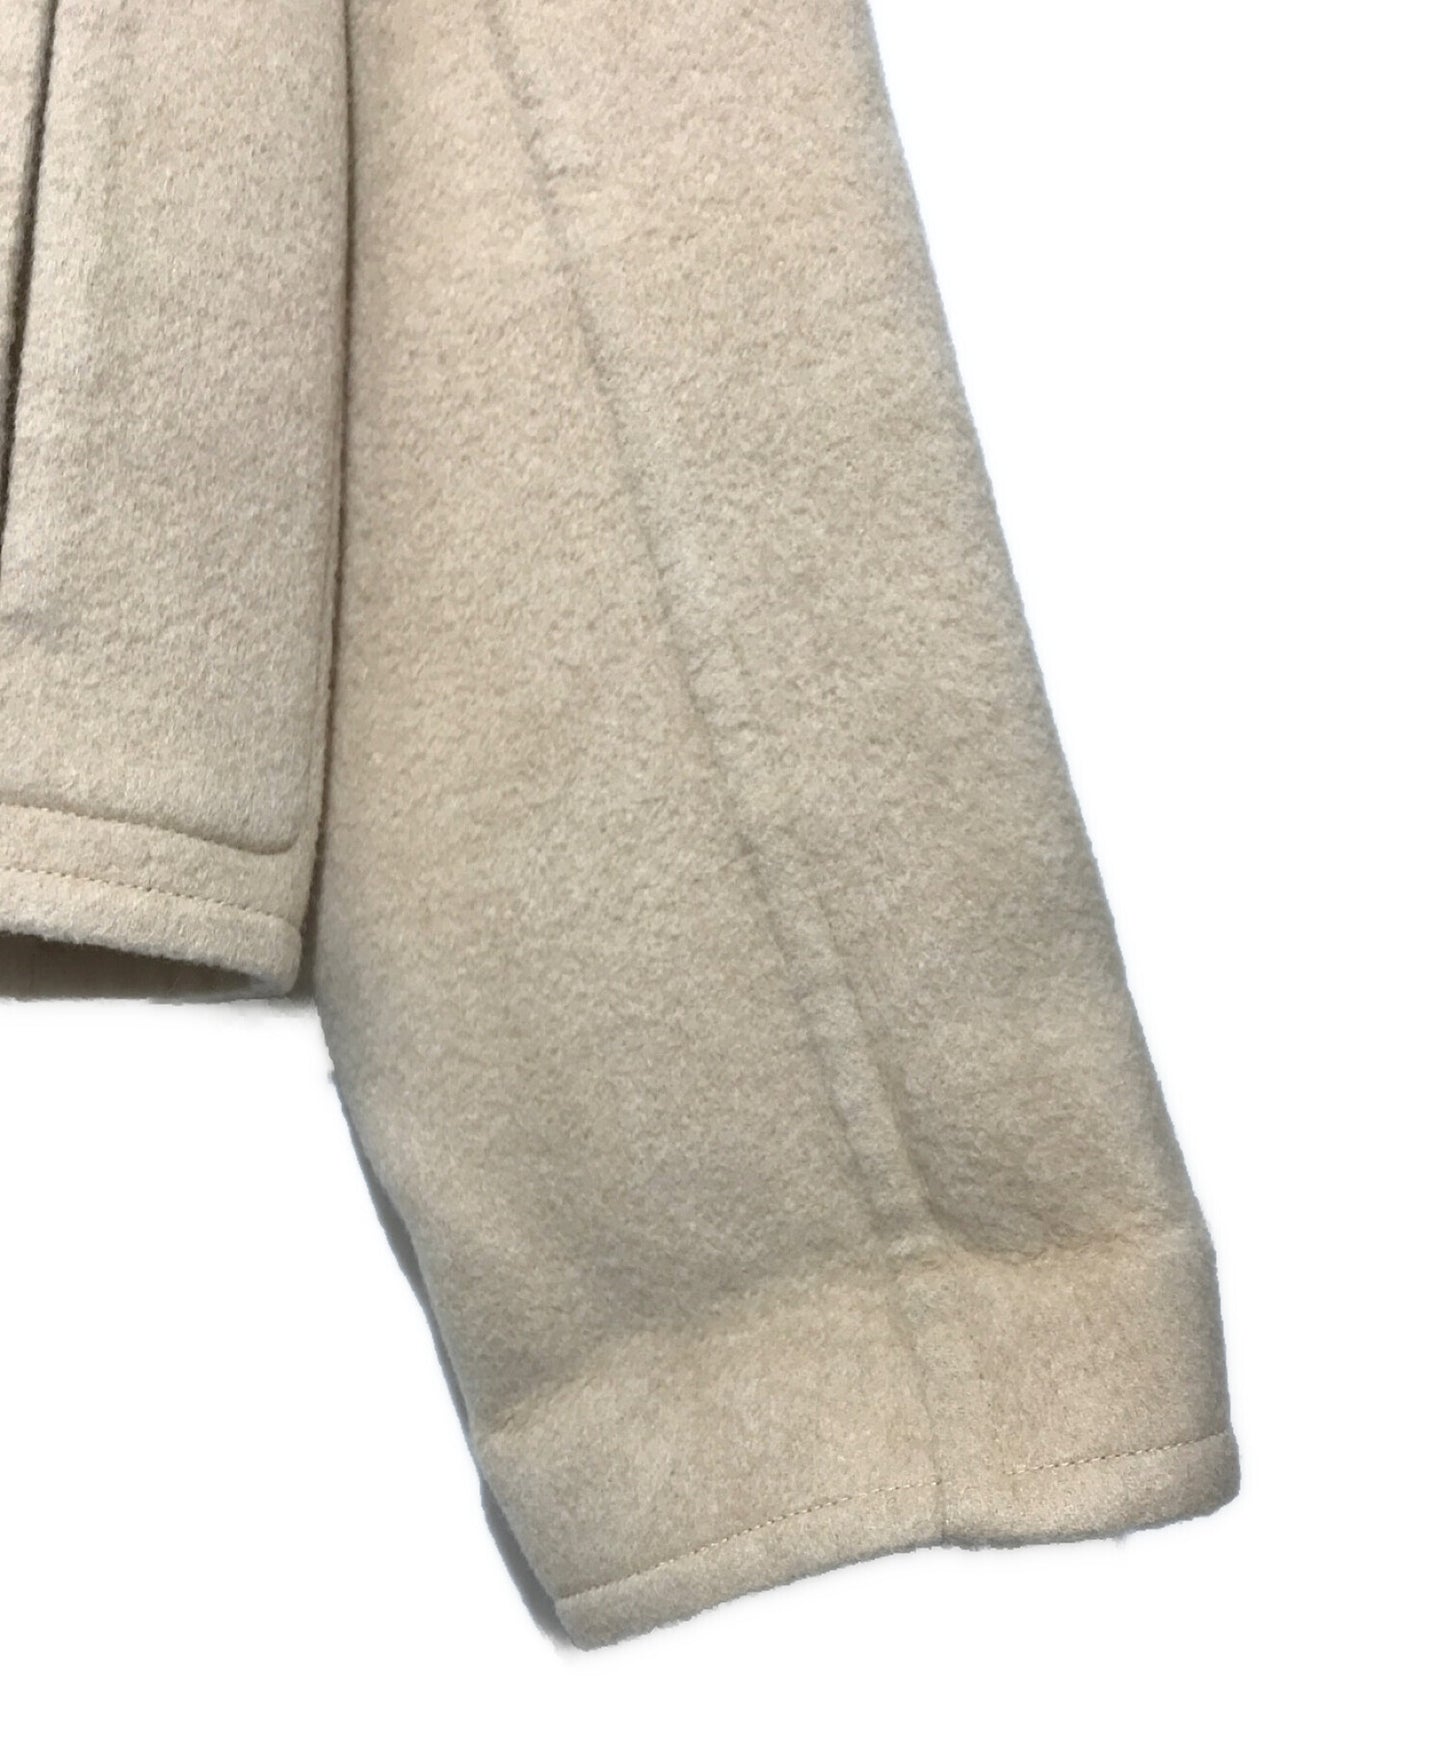 [Pre-owned] HERMES 90~00's camel cashmere jacket